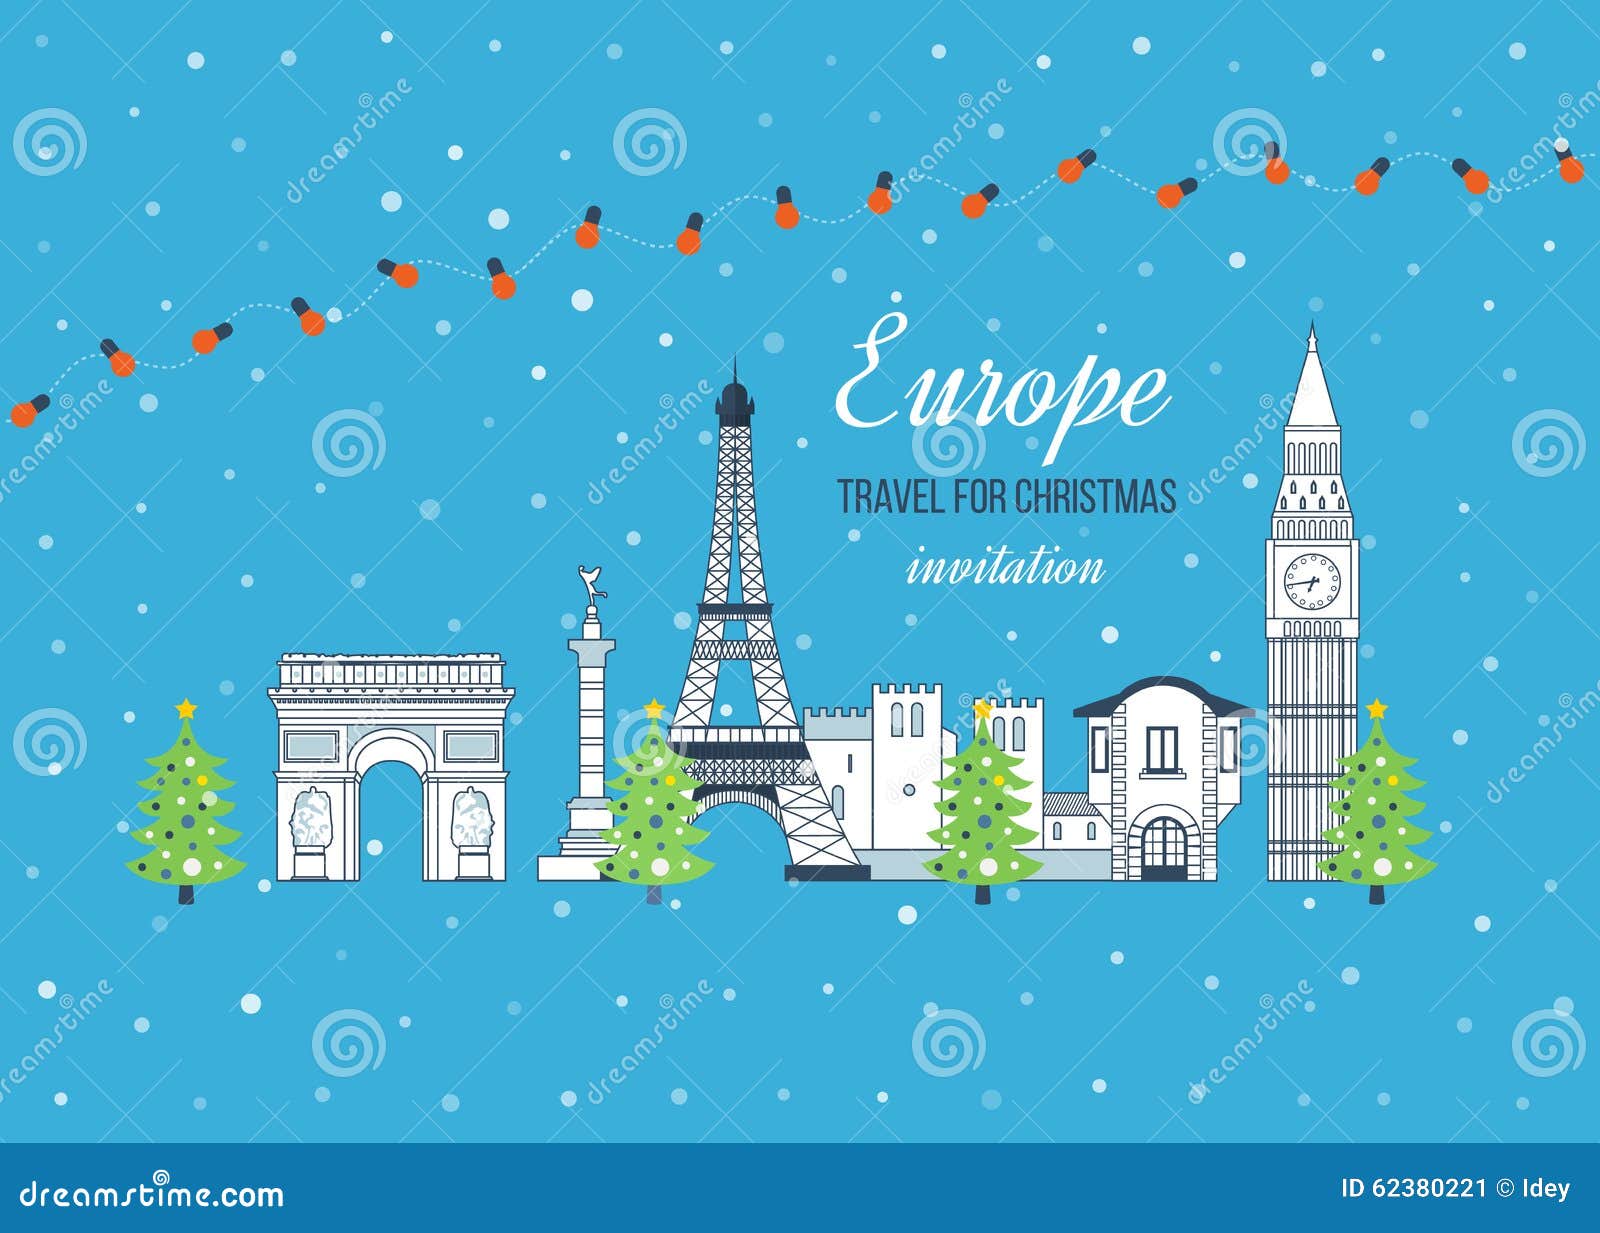 Travel To Europe For Christmas. Merry Christmas Stock 